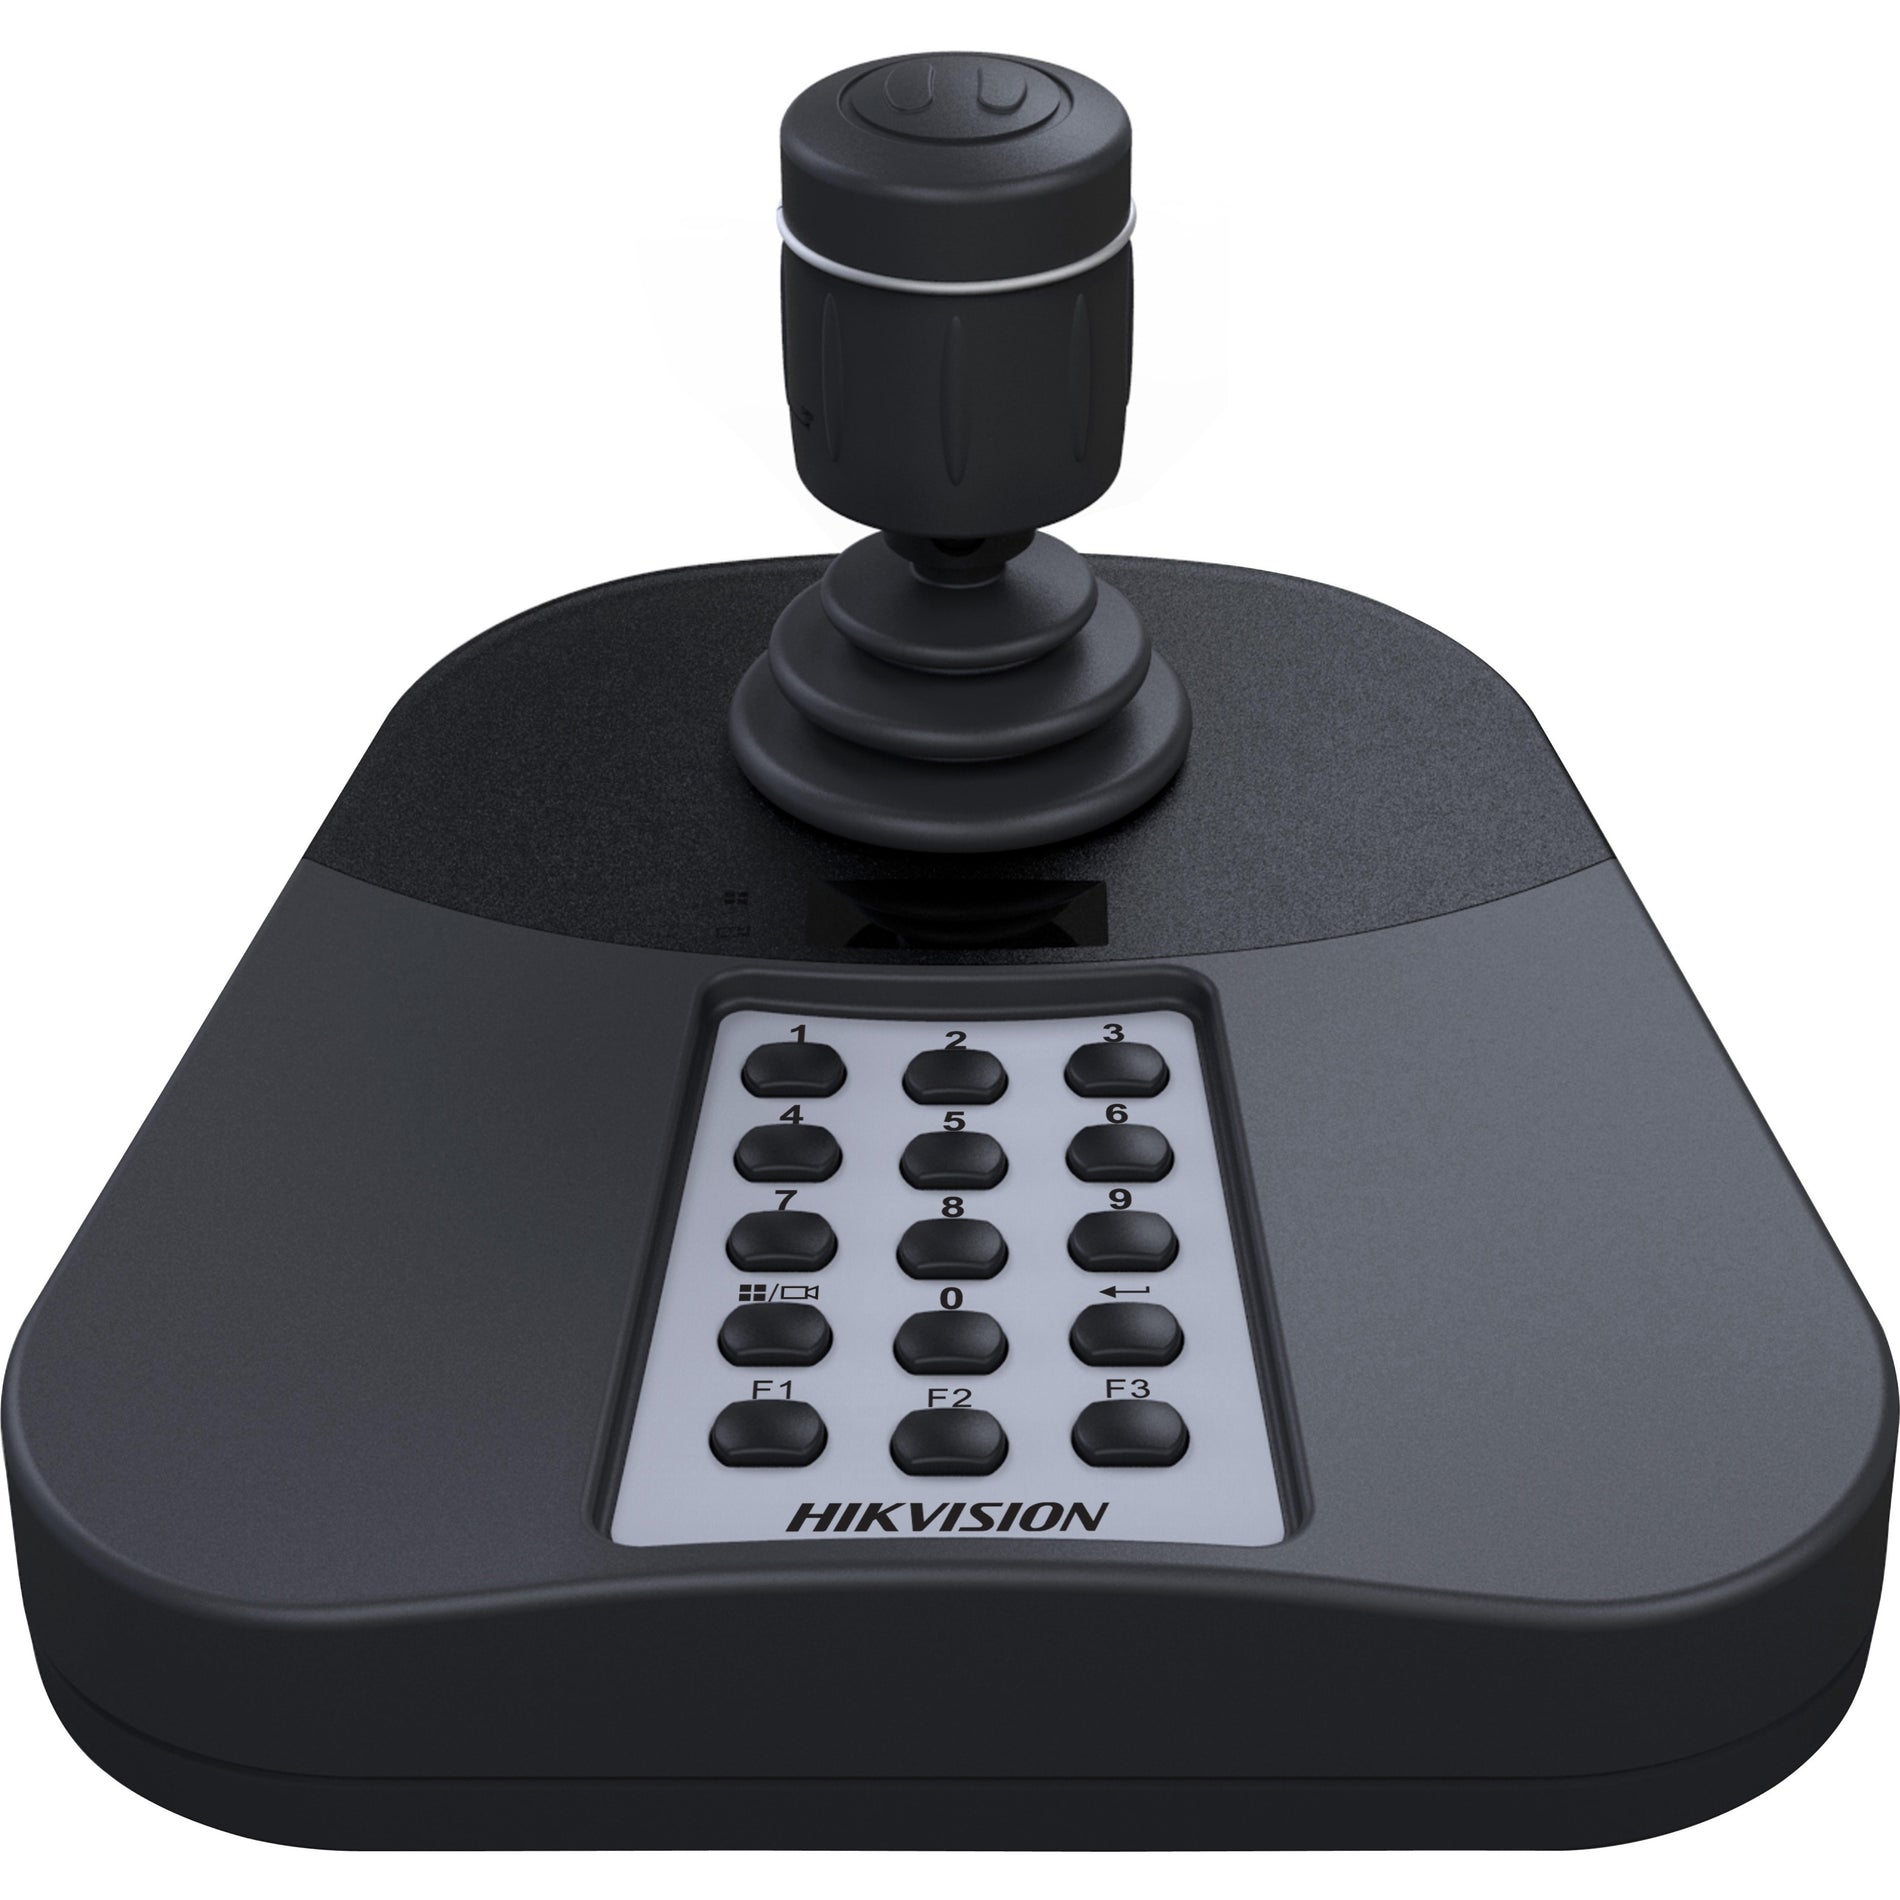 Hikvision DS-1005KI USB Keyboard, Surveillance Control Panel with Programmable Keys